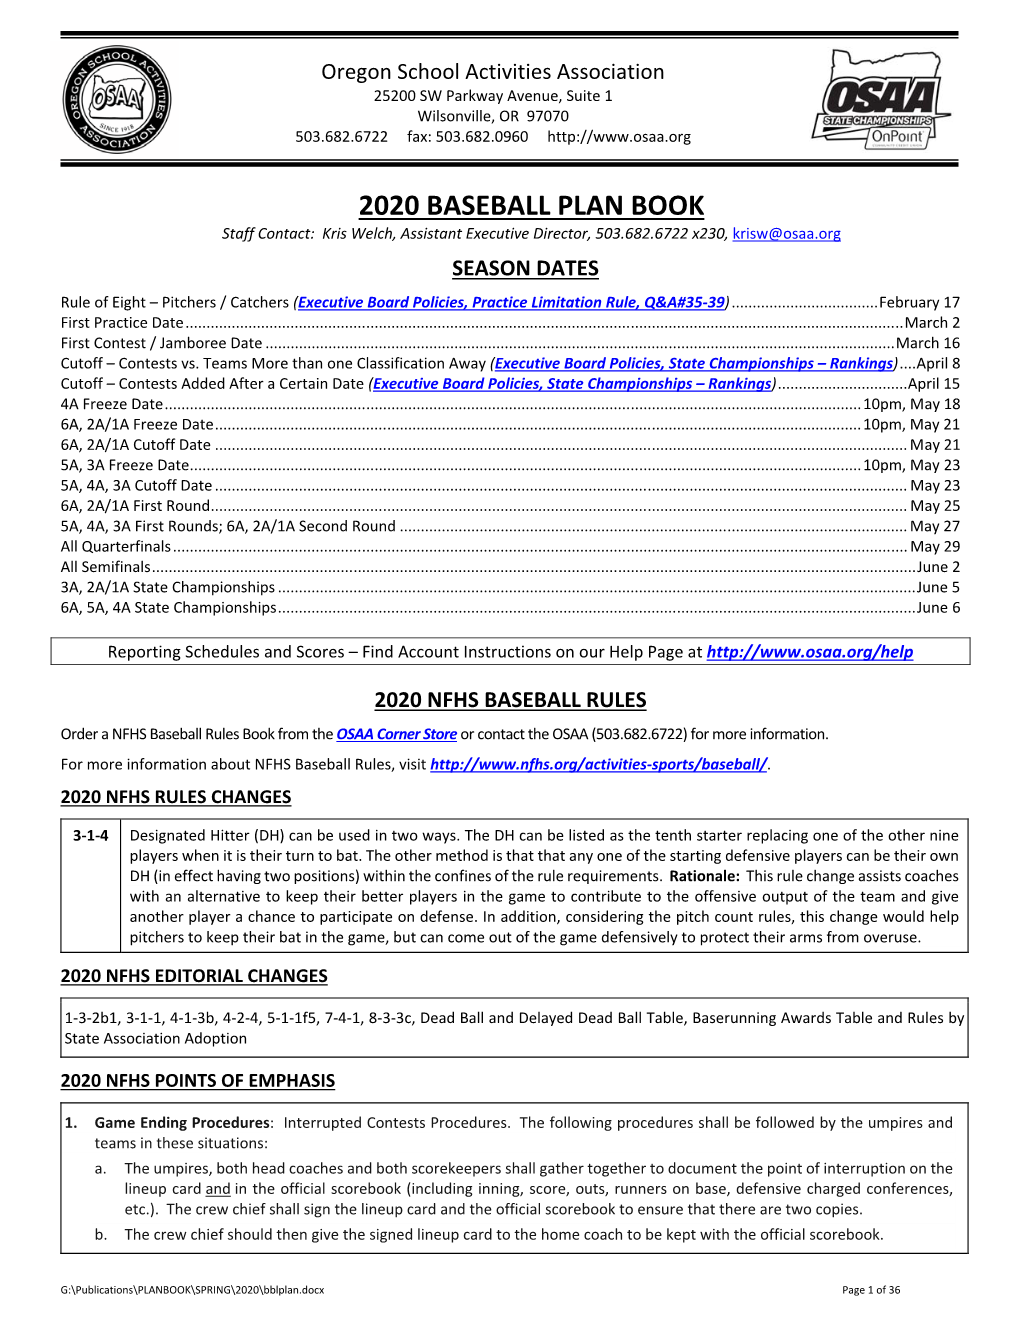 2020 Baseball Plan Book